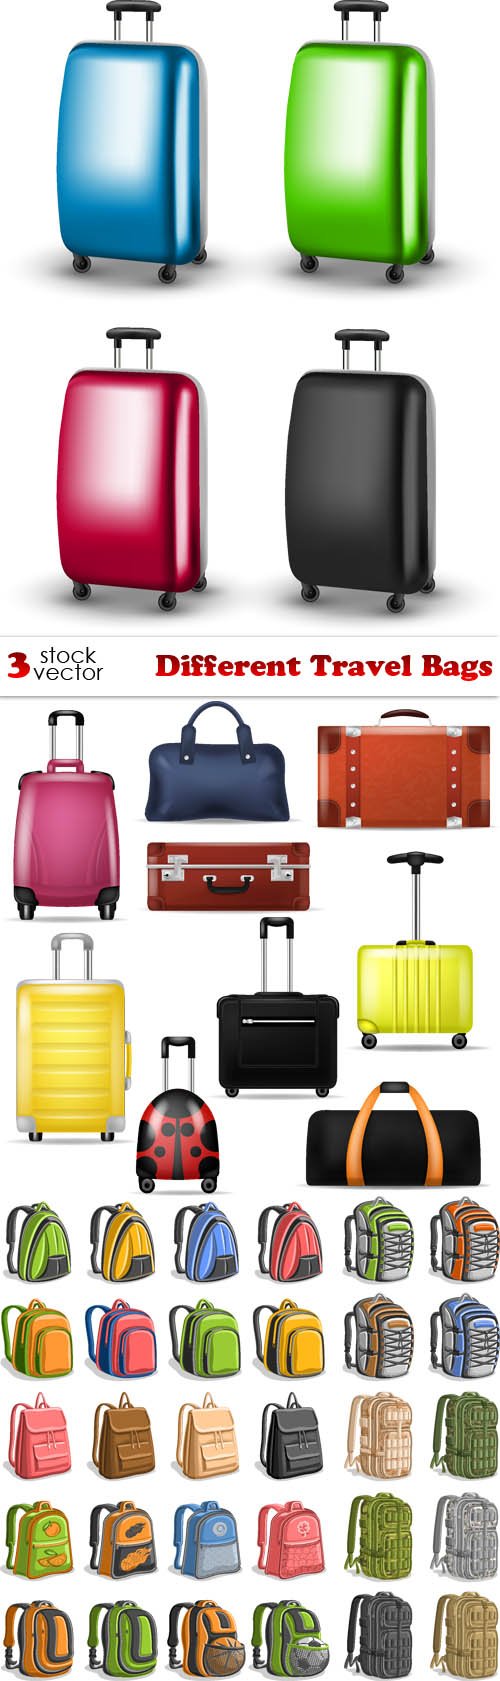 Vectors - Different Travel Bags